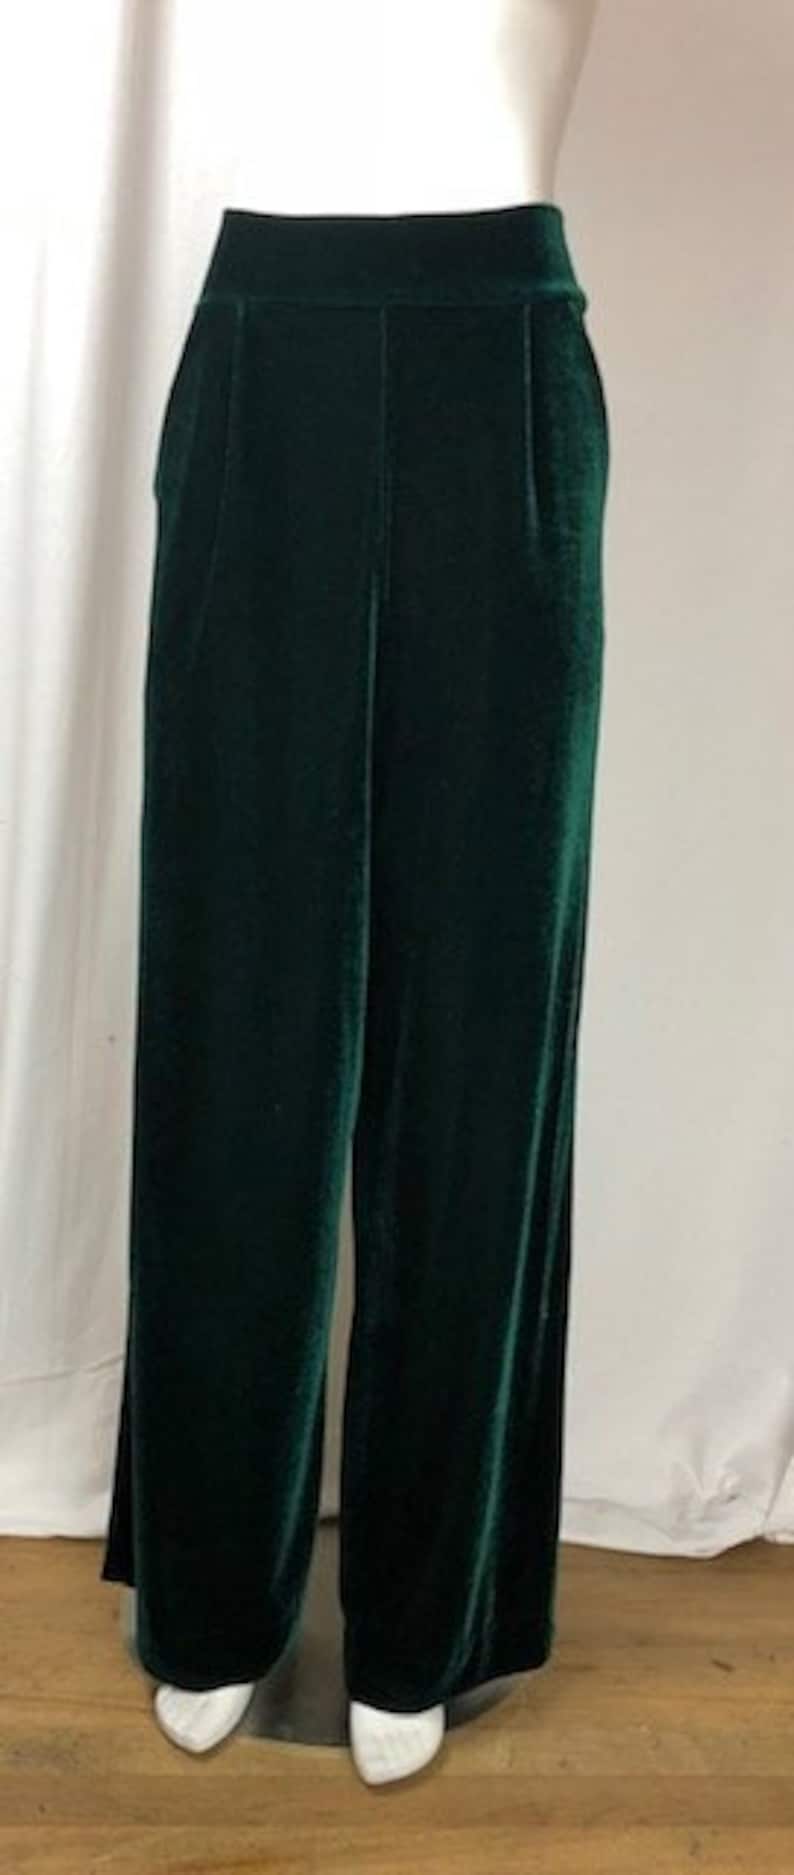 1920s Style Women’s Pants, Trousers, Knickers, Tuxedo     Green Velvet pocket wide trousers Pants.  AT vintagedancer.com